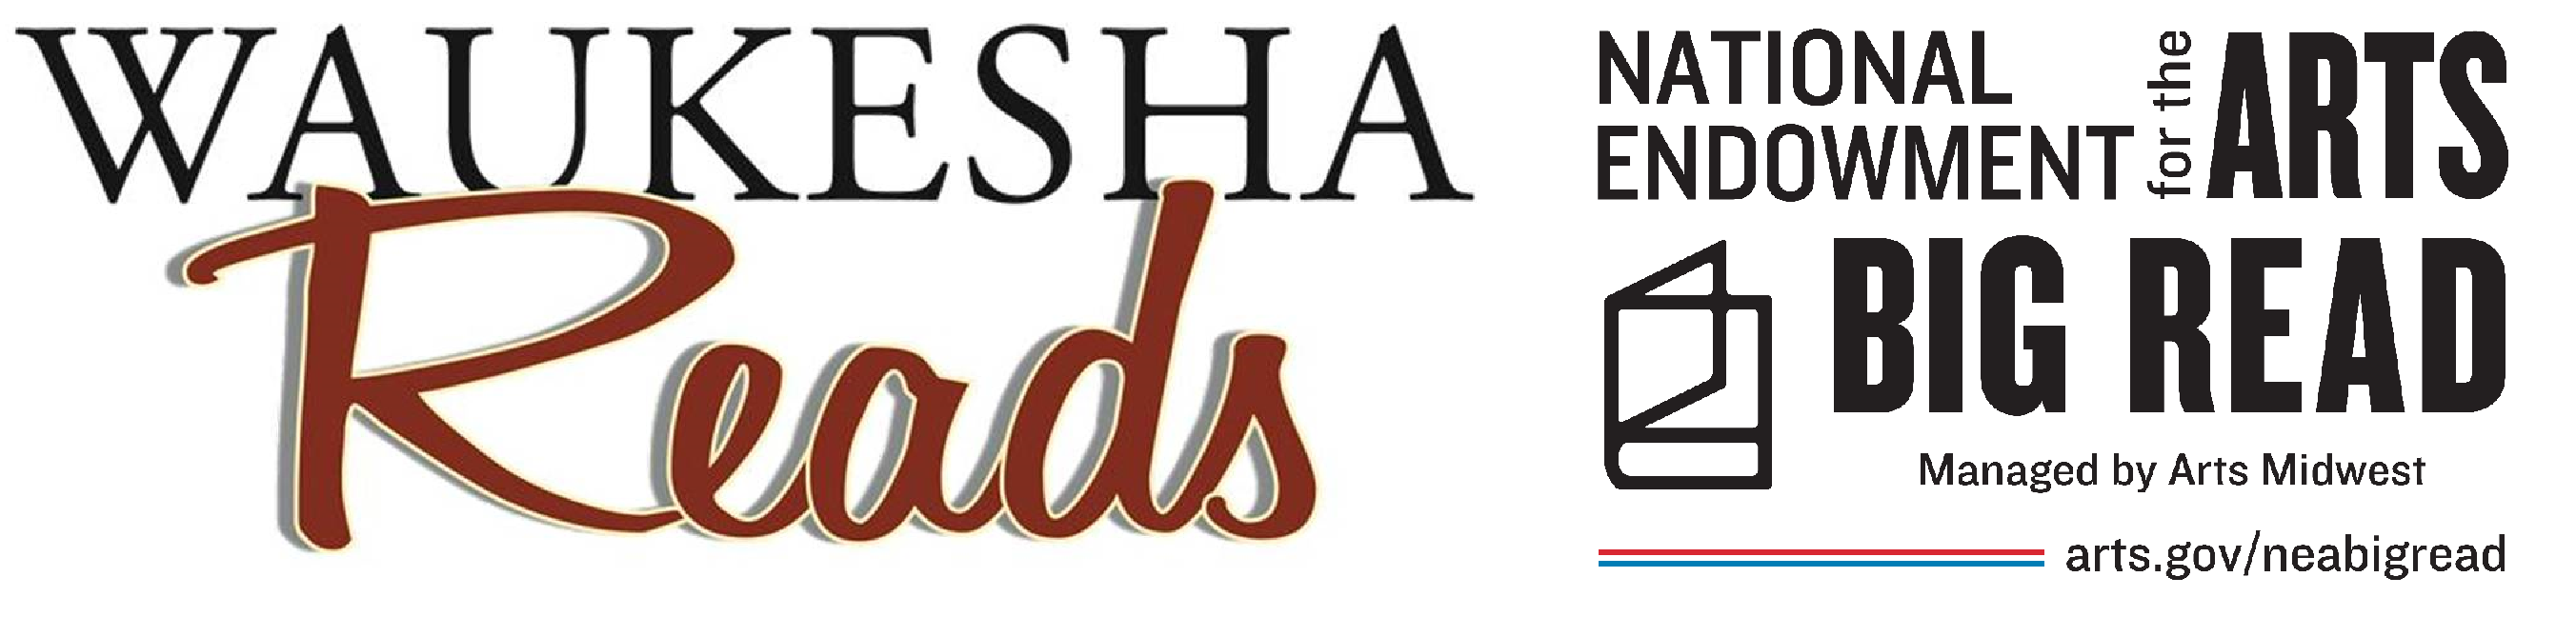 Waukesha Reads NEA Big Read Logos